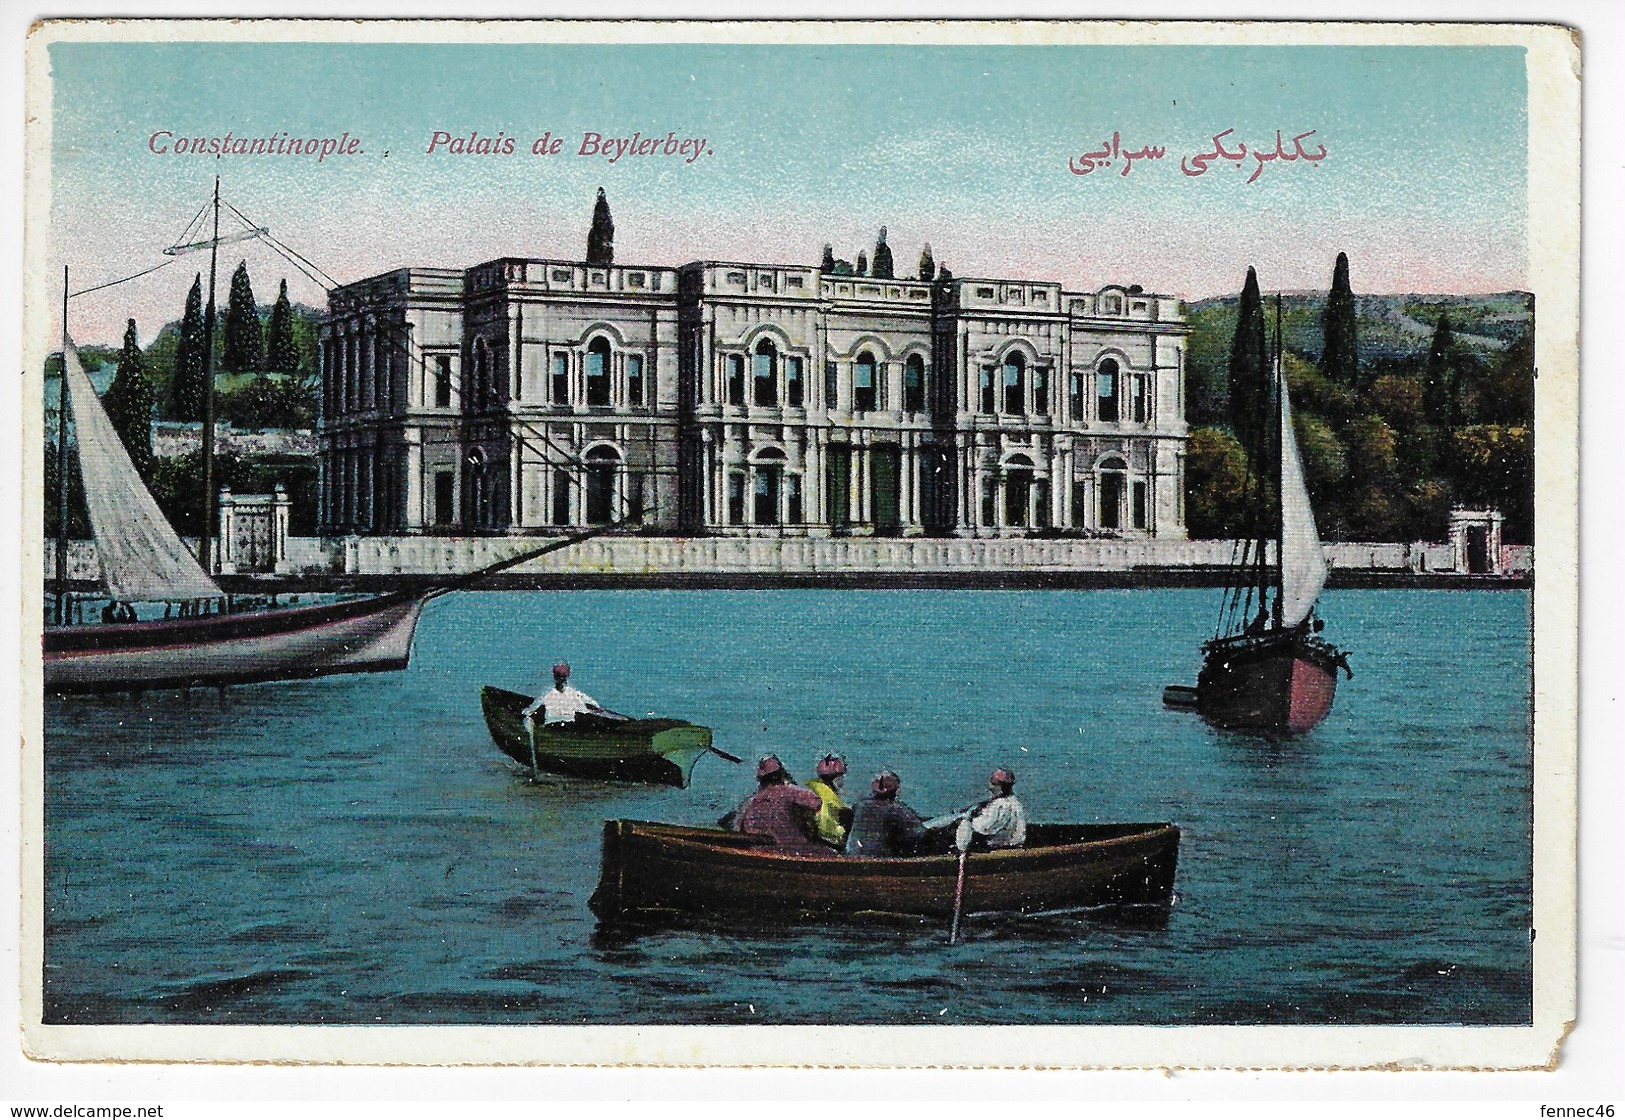 TURQUIE - CONSTANTINOPLE (Istamboul) - Palais De Beylerbey - Animée + Bateaux (H2) - Turquie